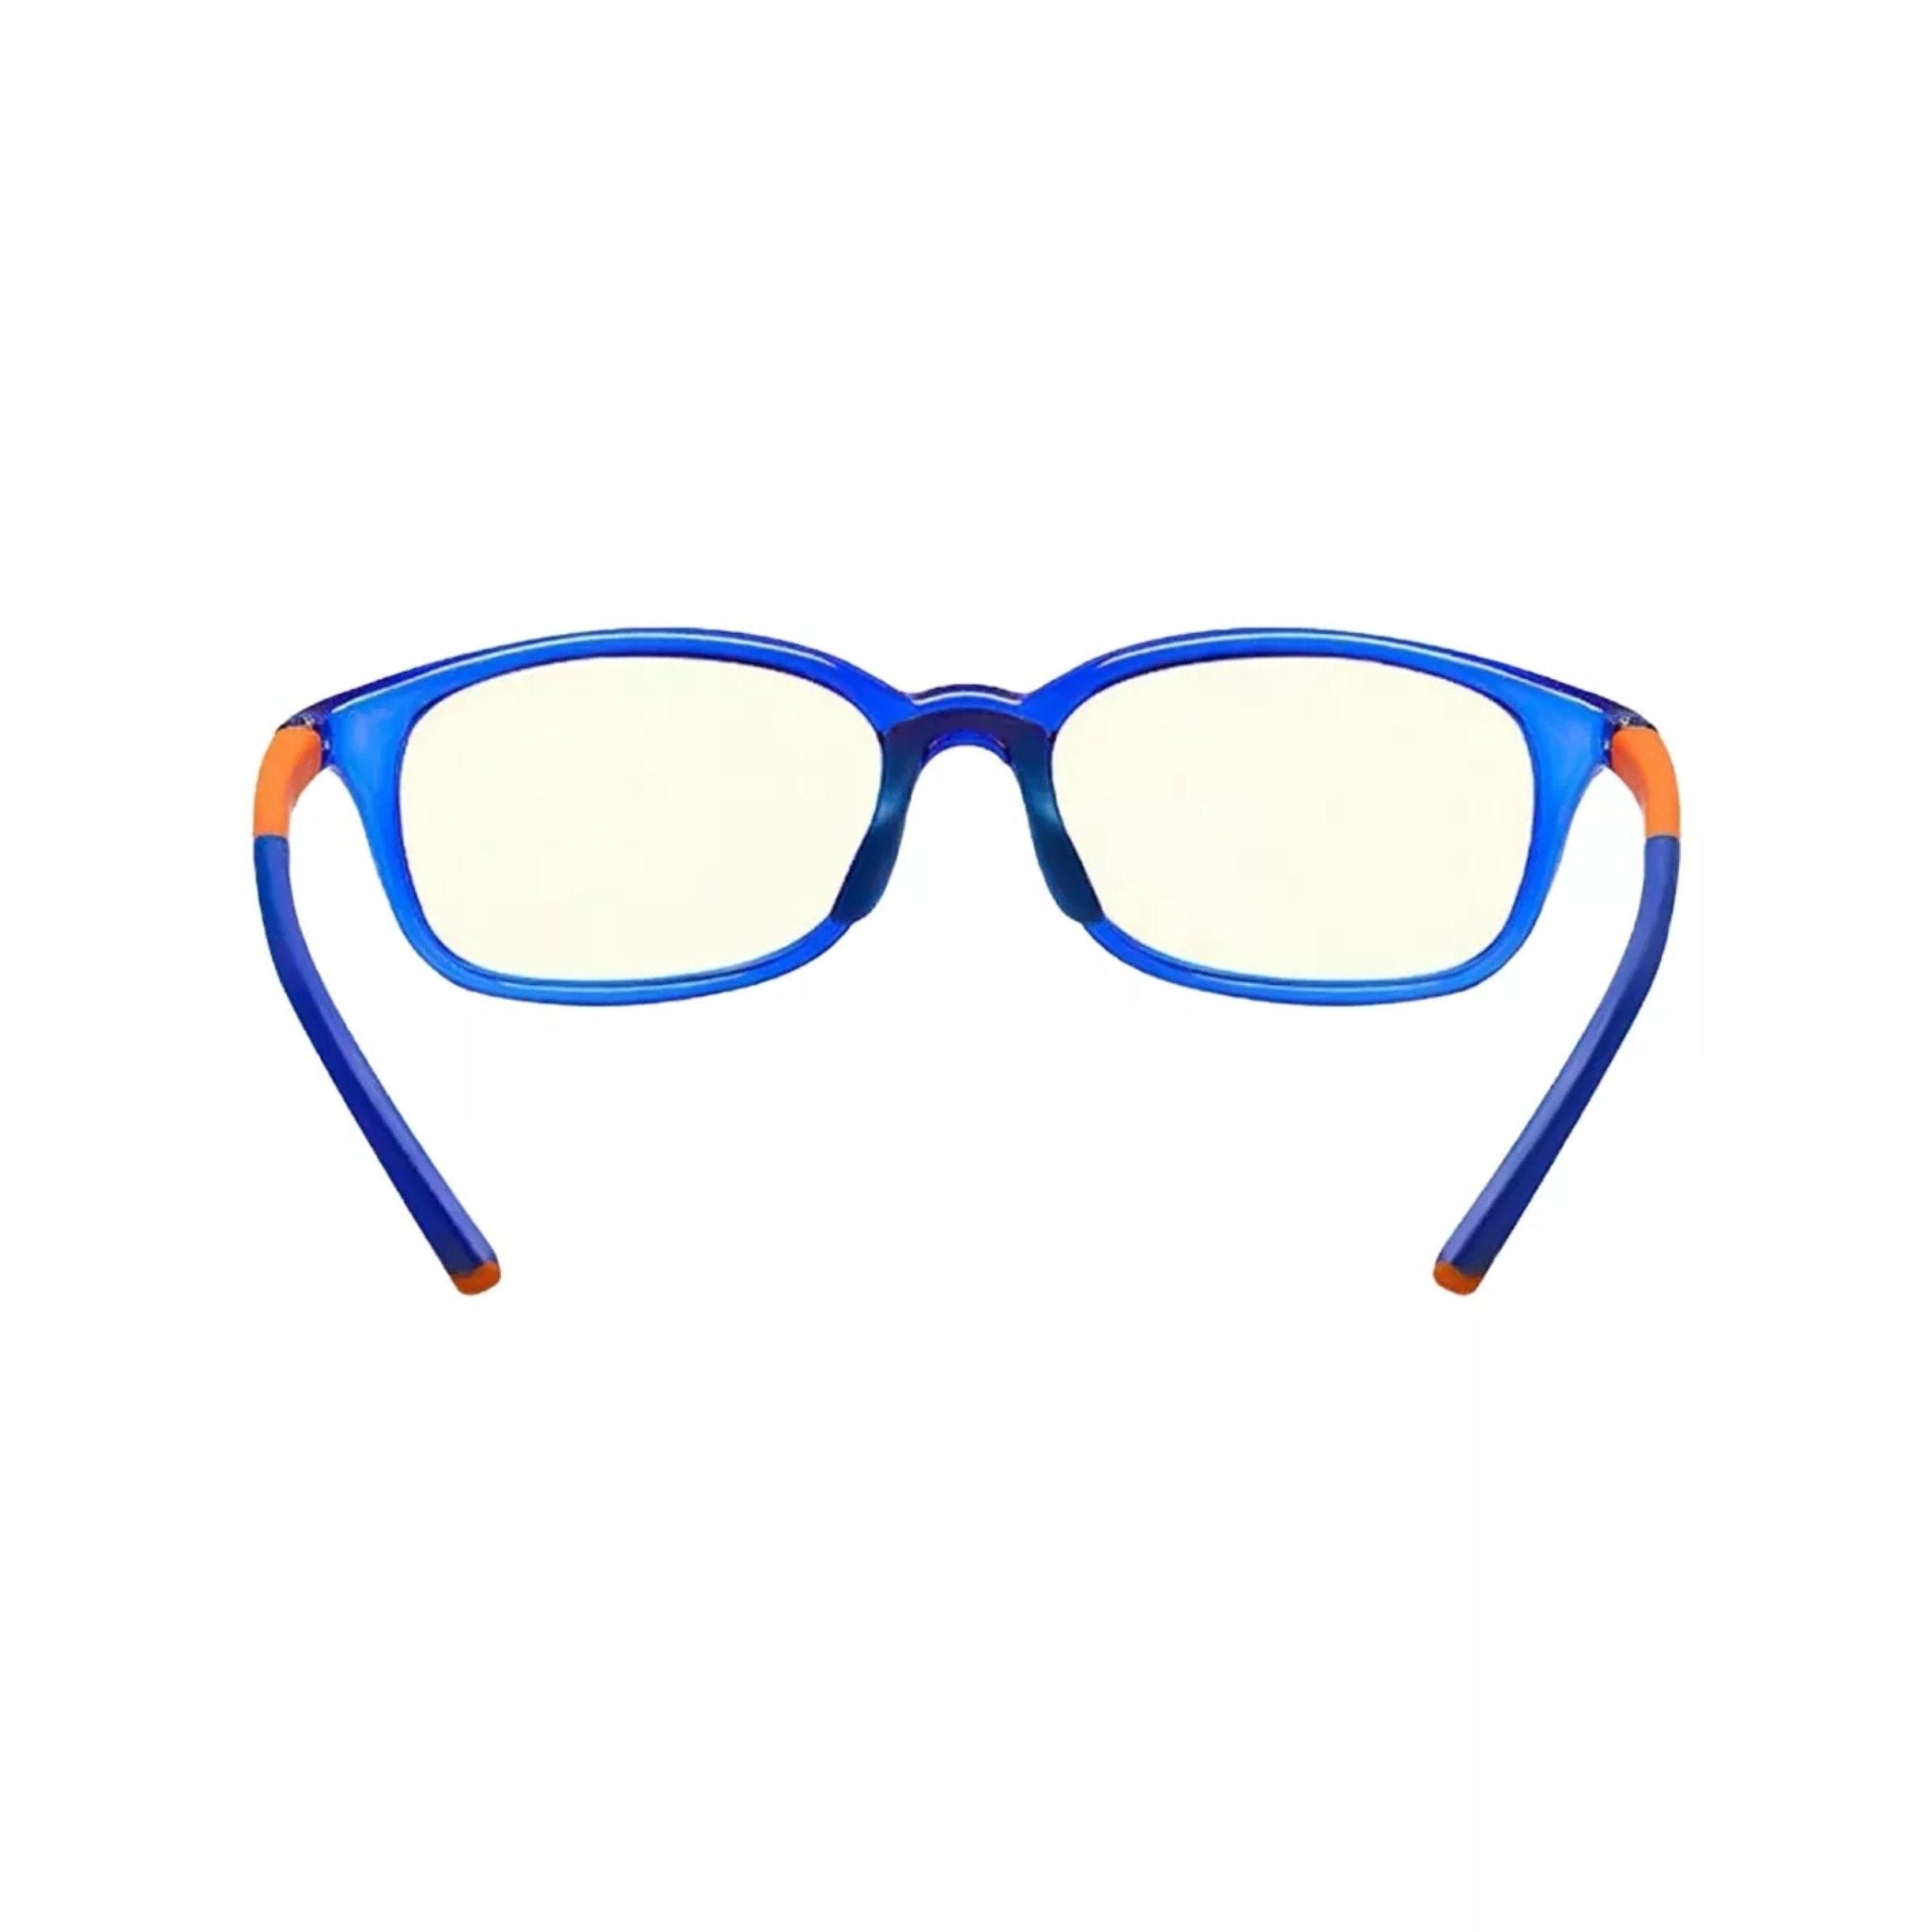 Mi Children Anti Blue Ray Protection Glasses - Blue Orange